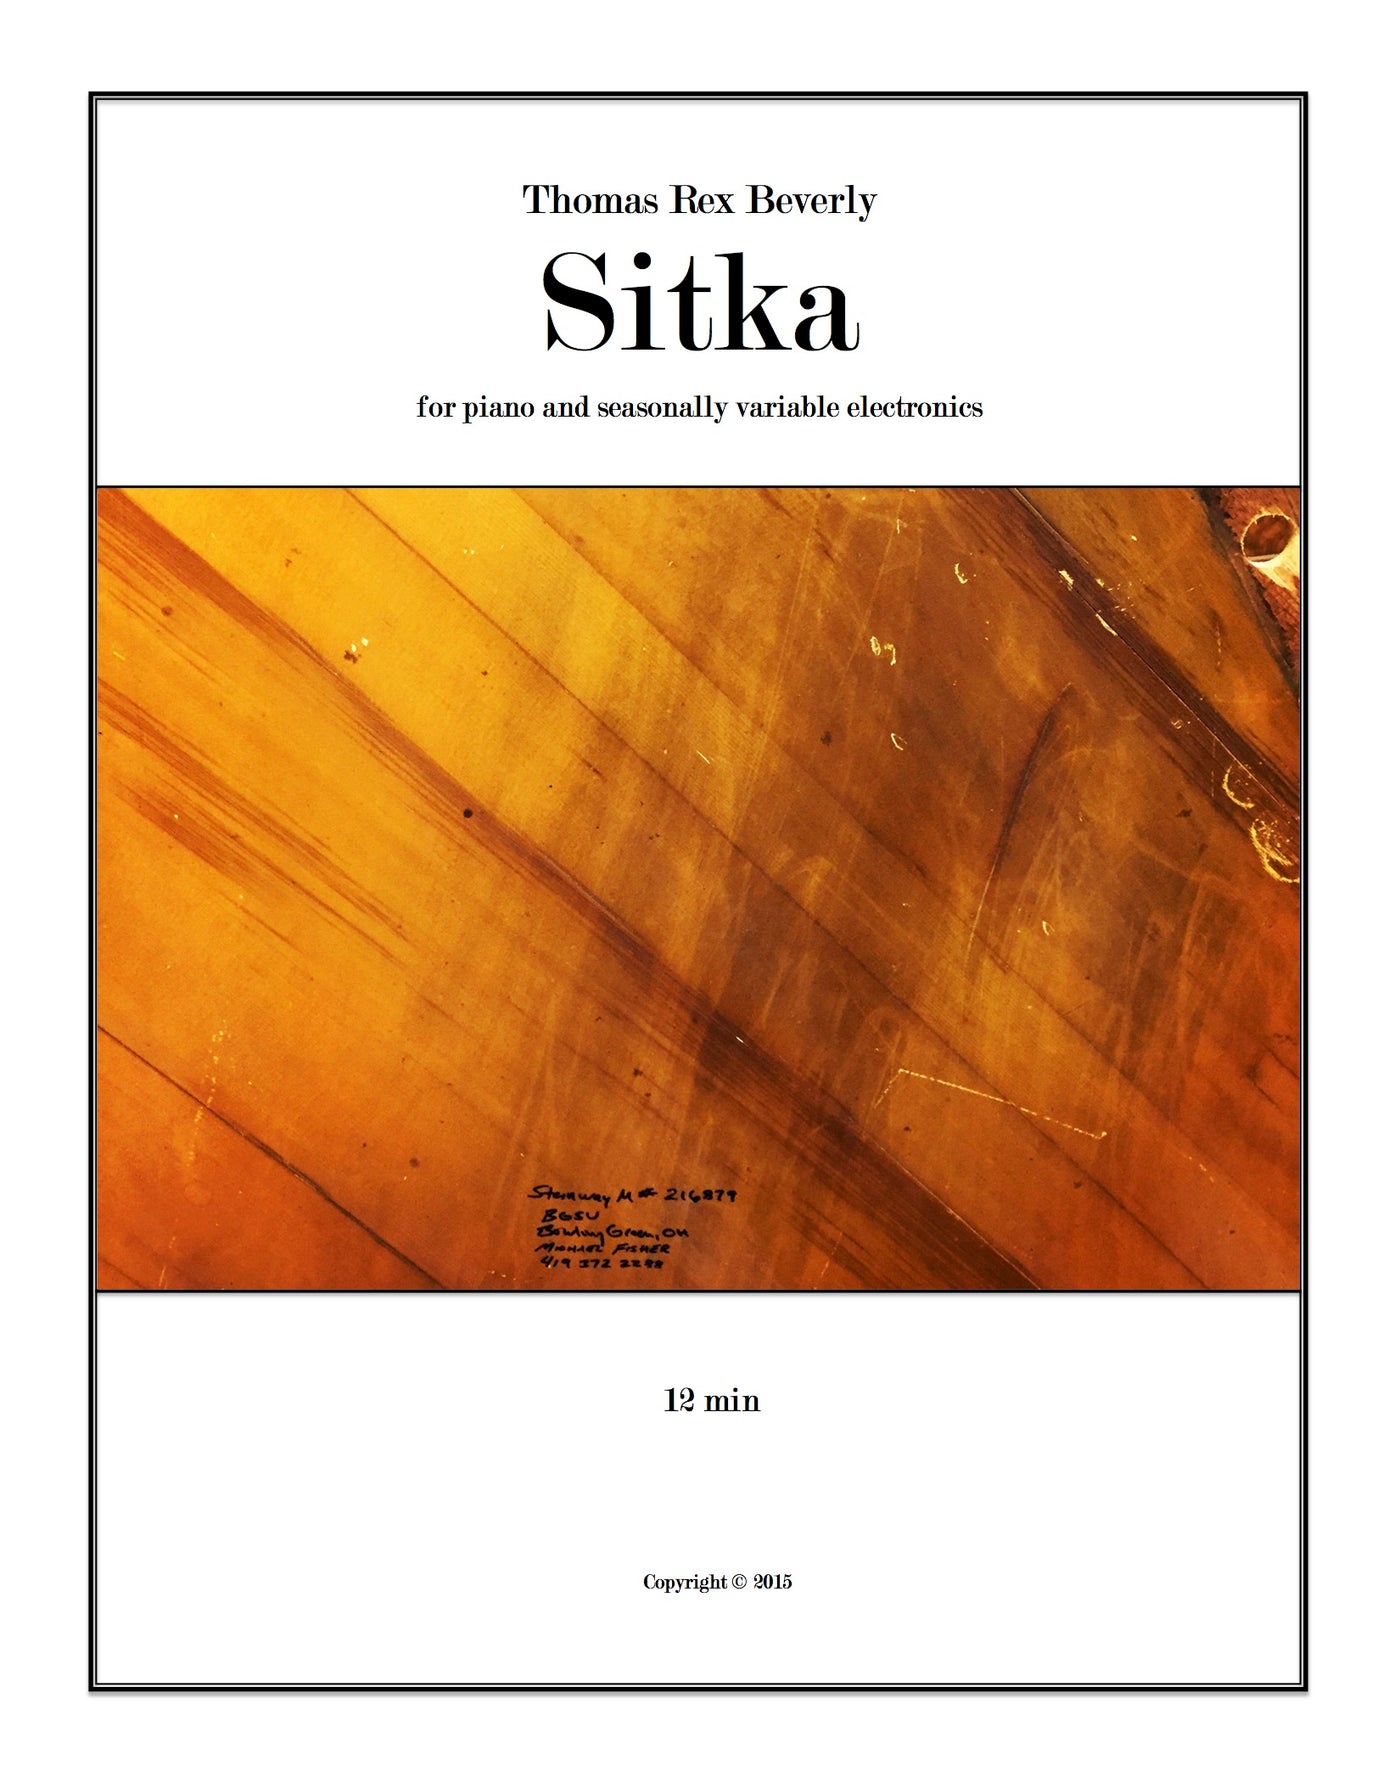 Sitka for piano and seasonal electronics (2015) - 12'